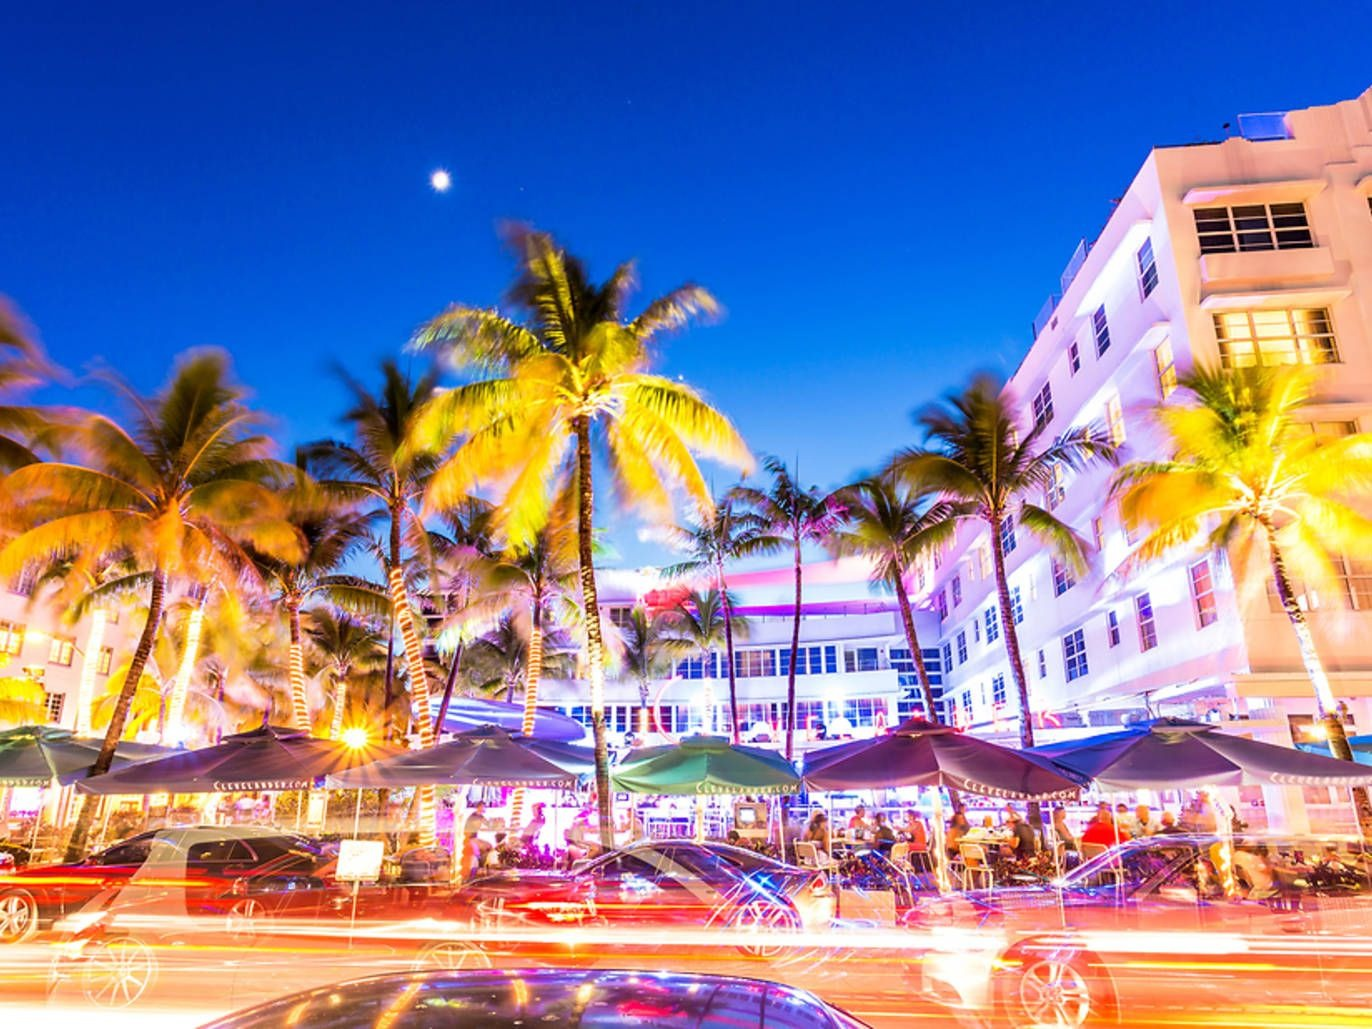 Miami lights